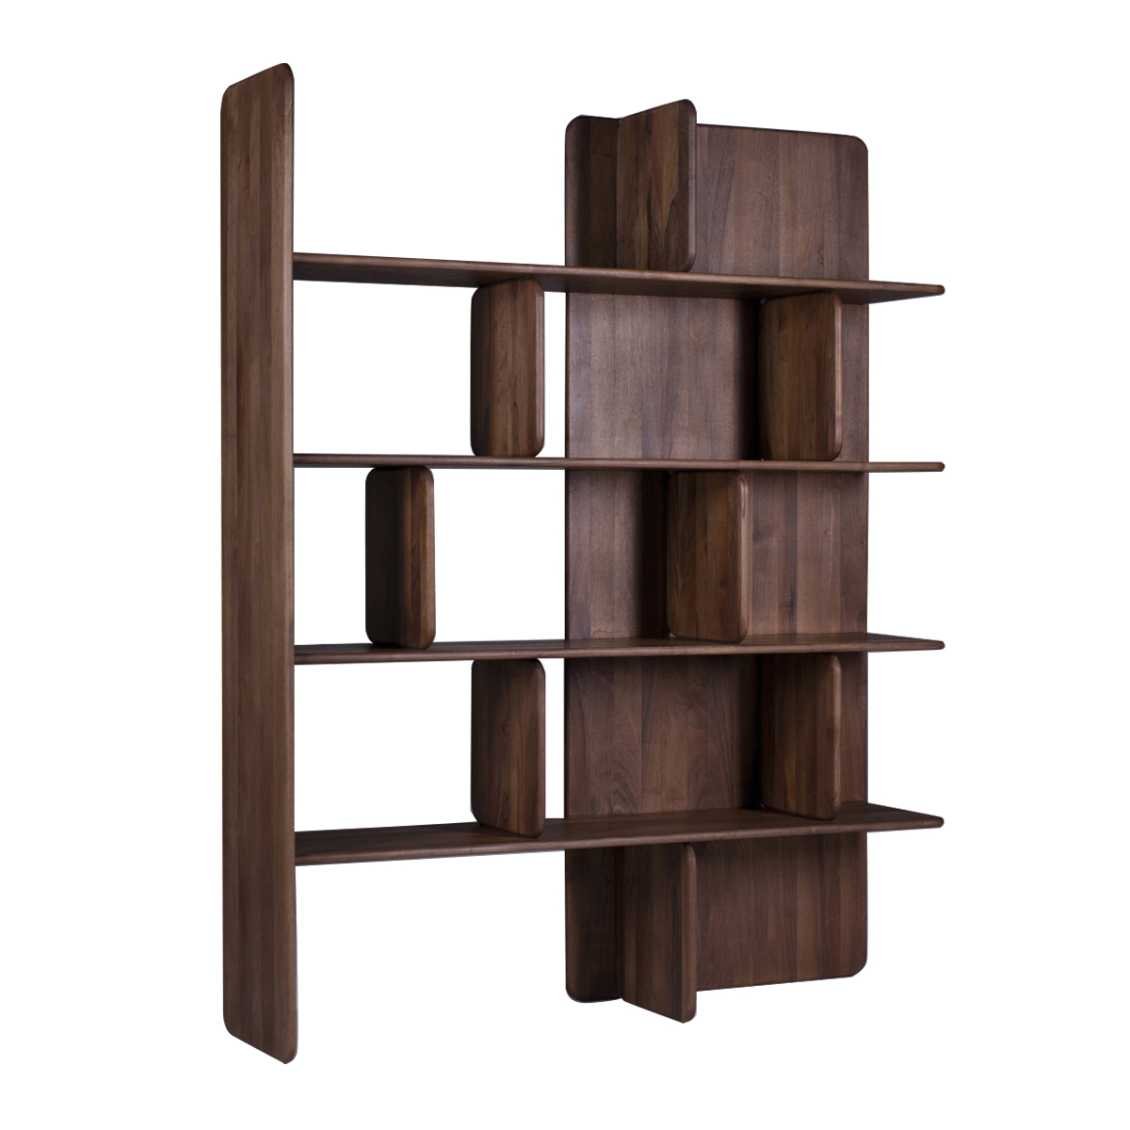 Artisan Soft shelf cabinet